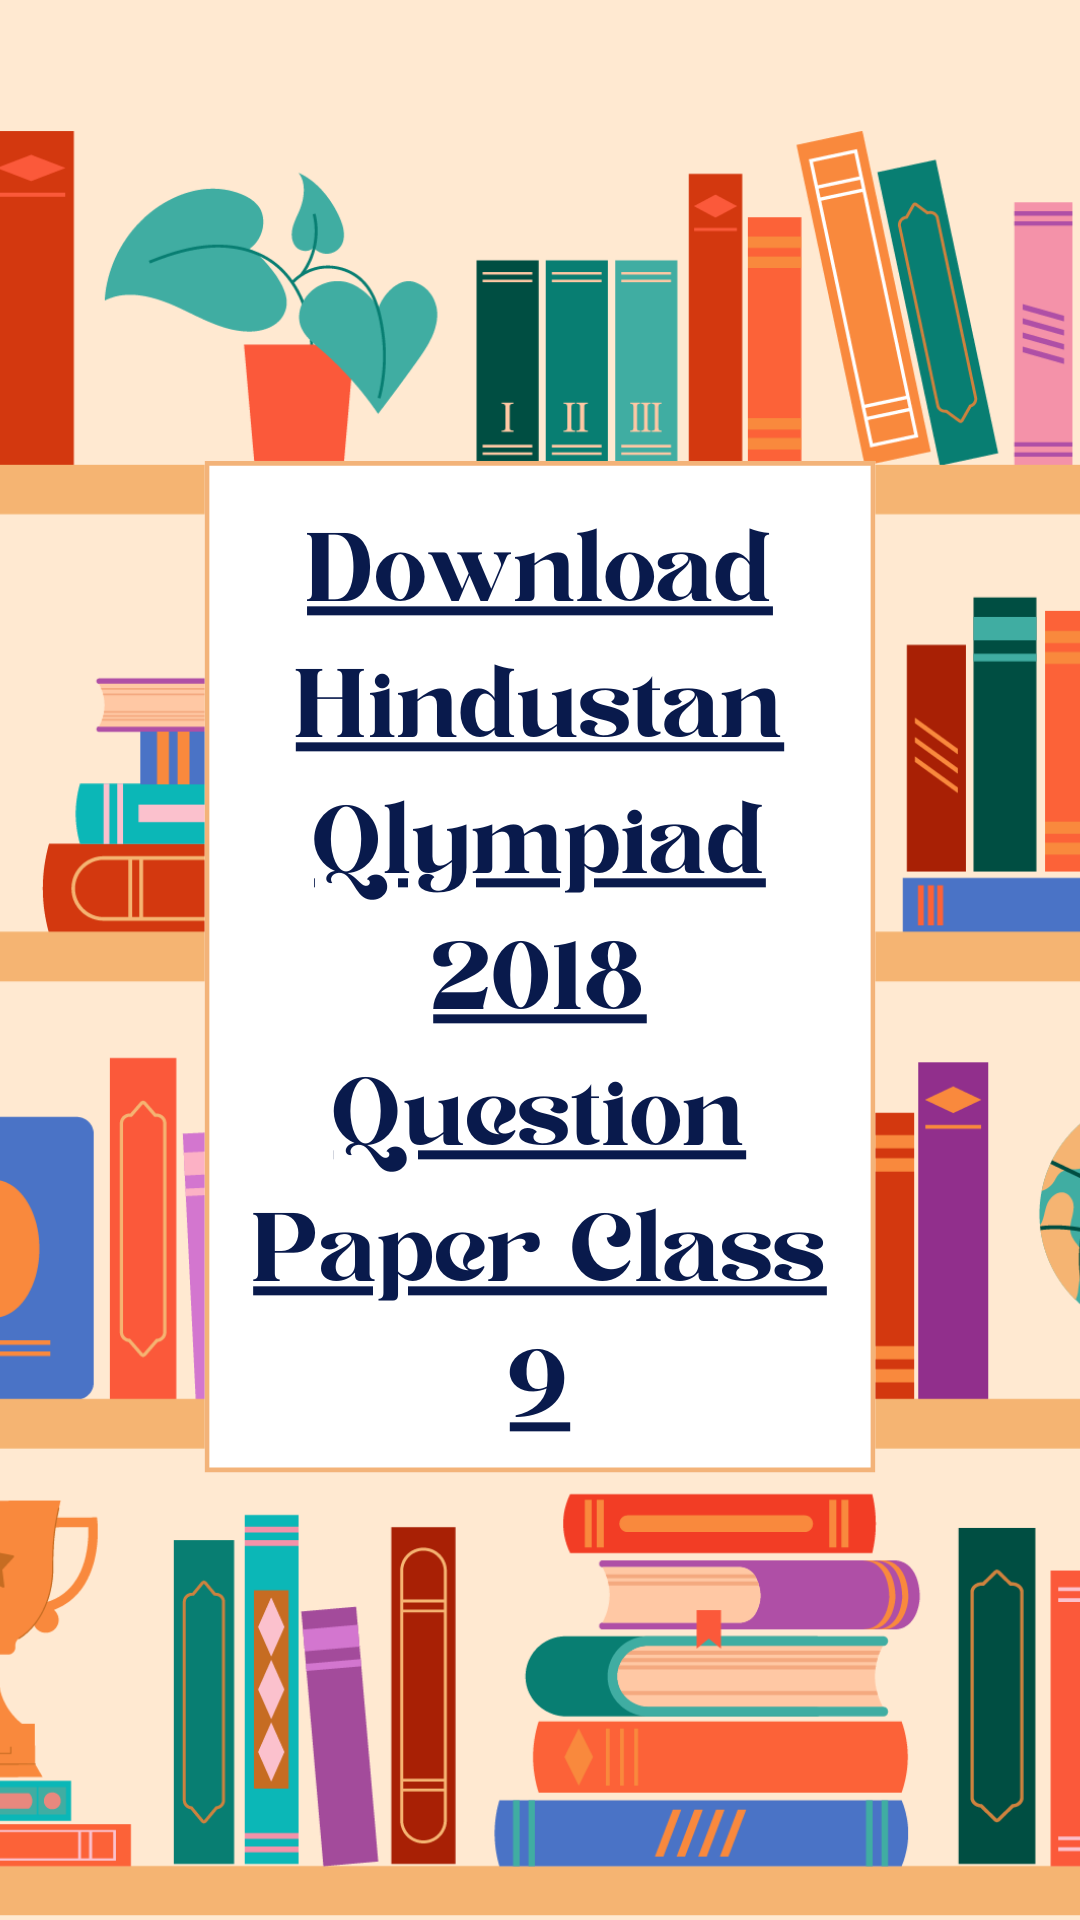 Download hindustan Qlympiad 2018 Question Paper Class 9